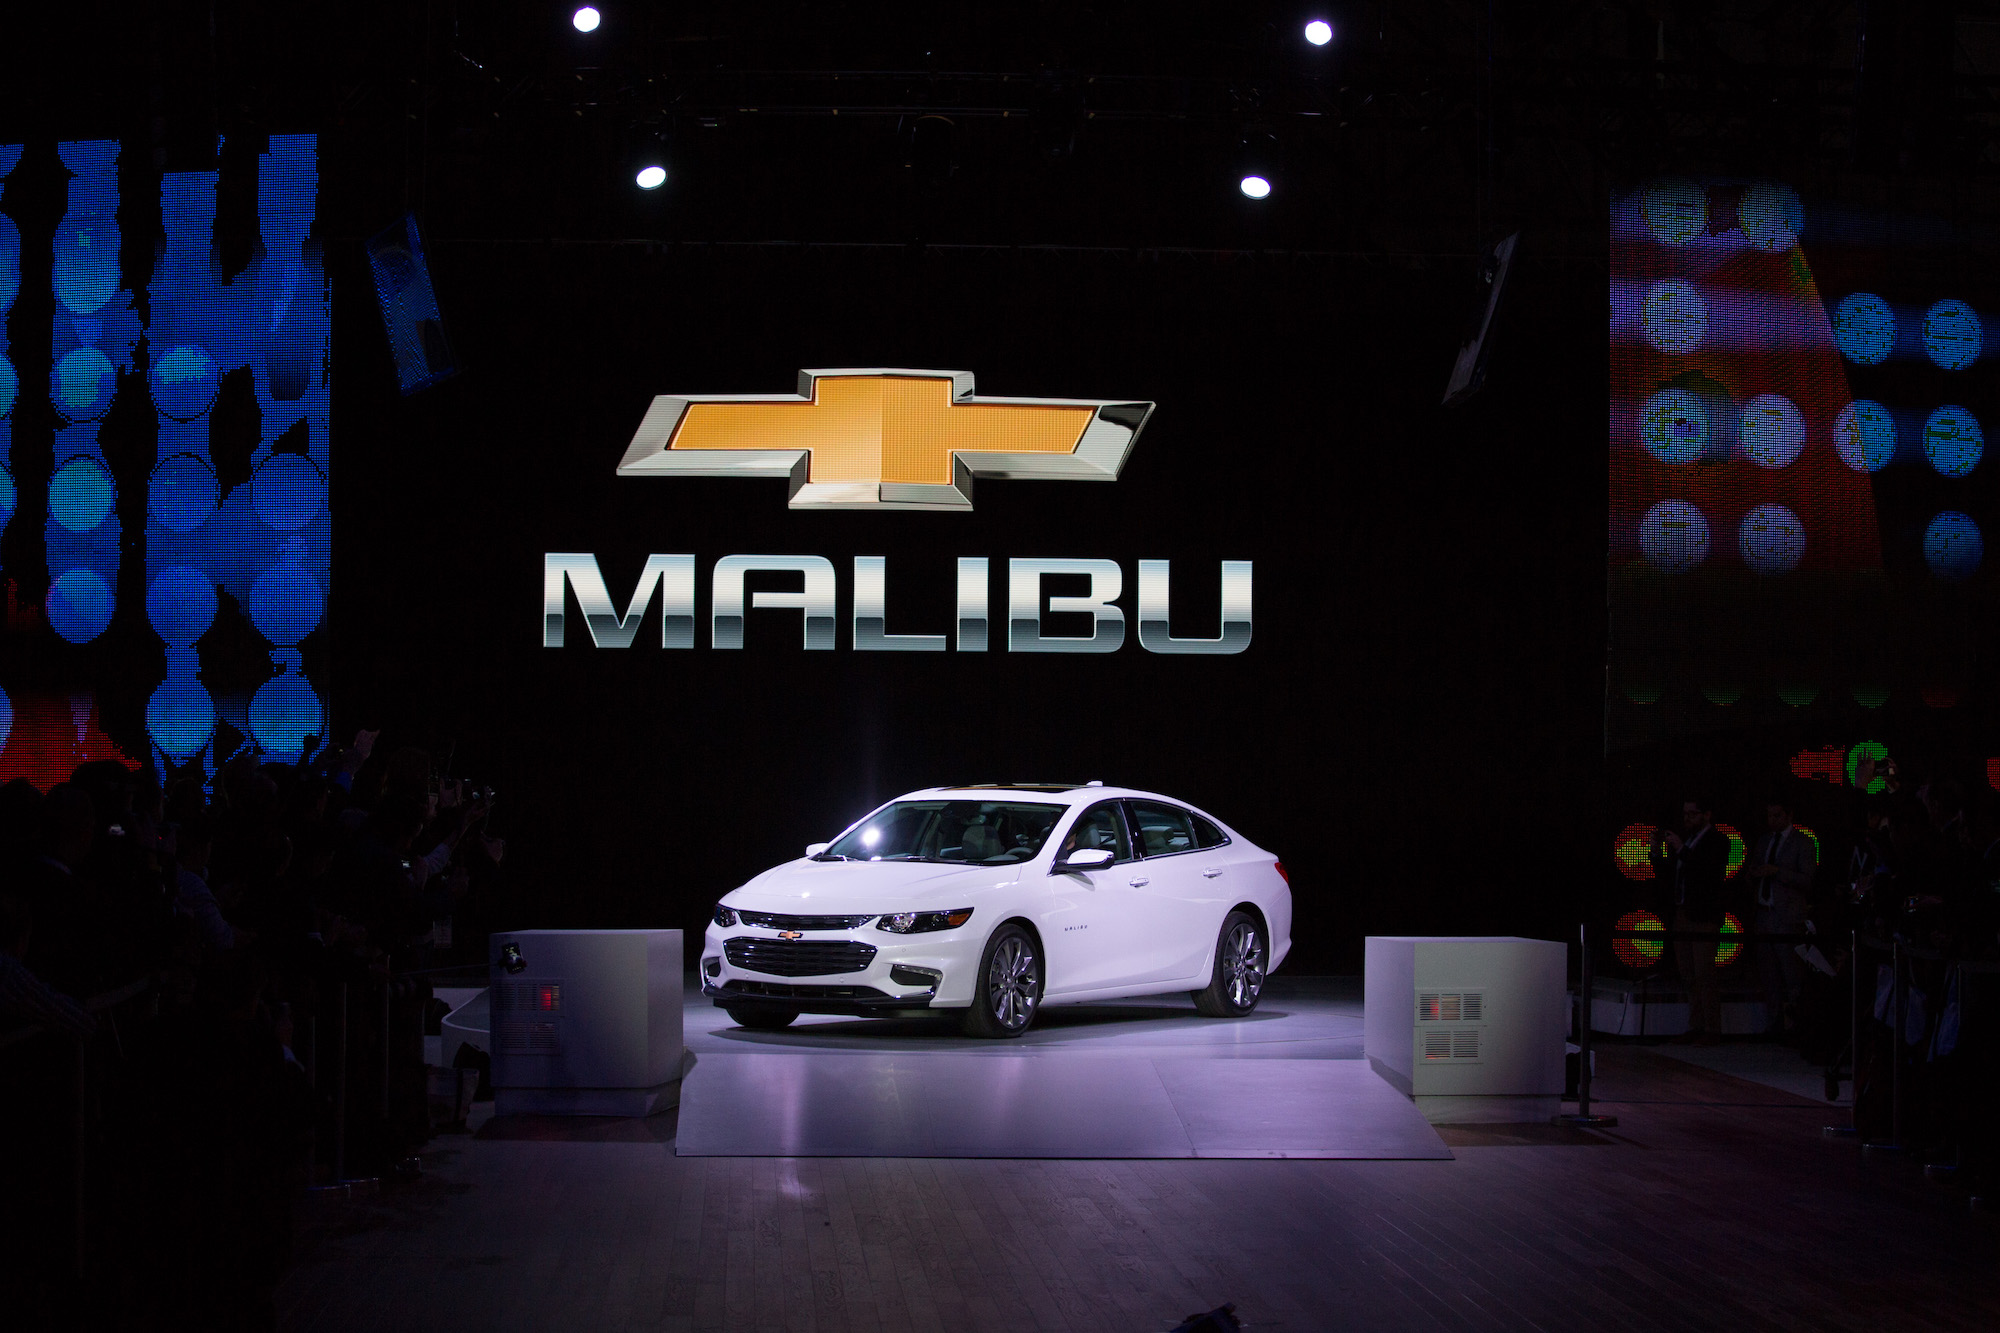 Chevrolet introduces its new Malibu (shown) and Hybrid Malibu models at the New York International Auto Show